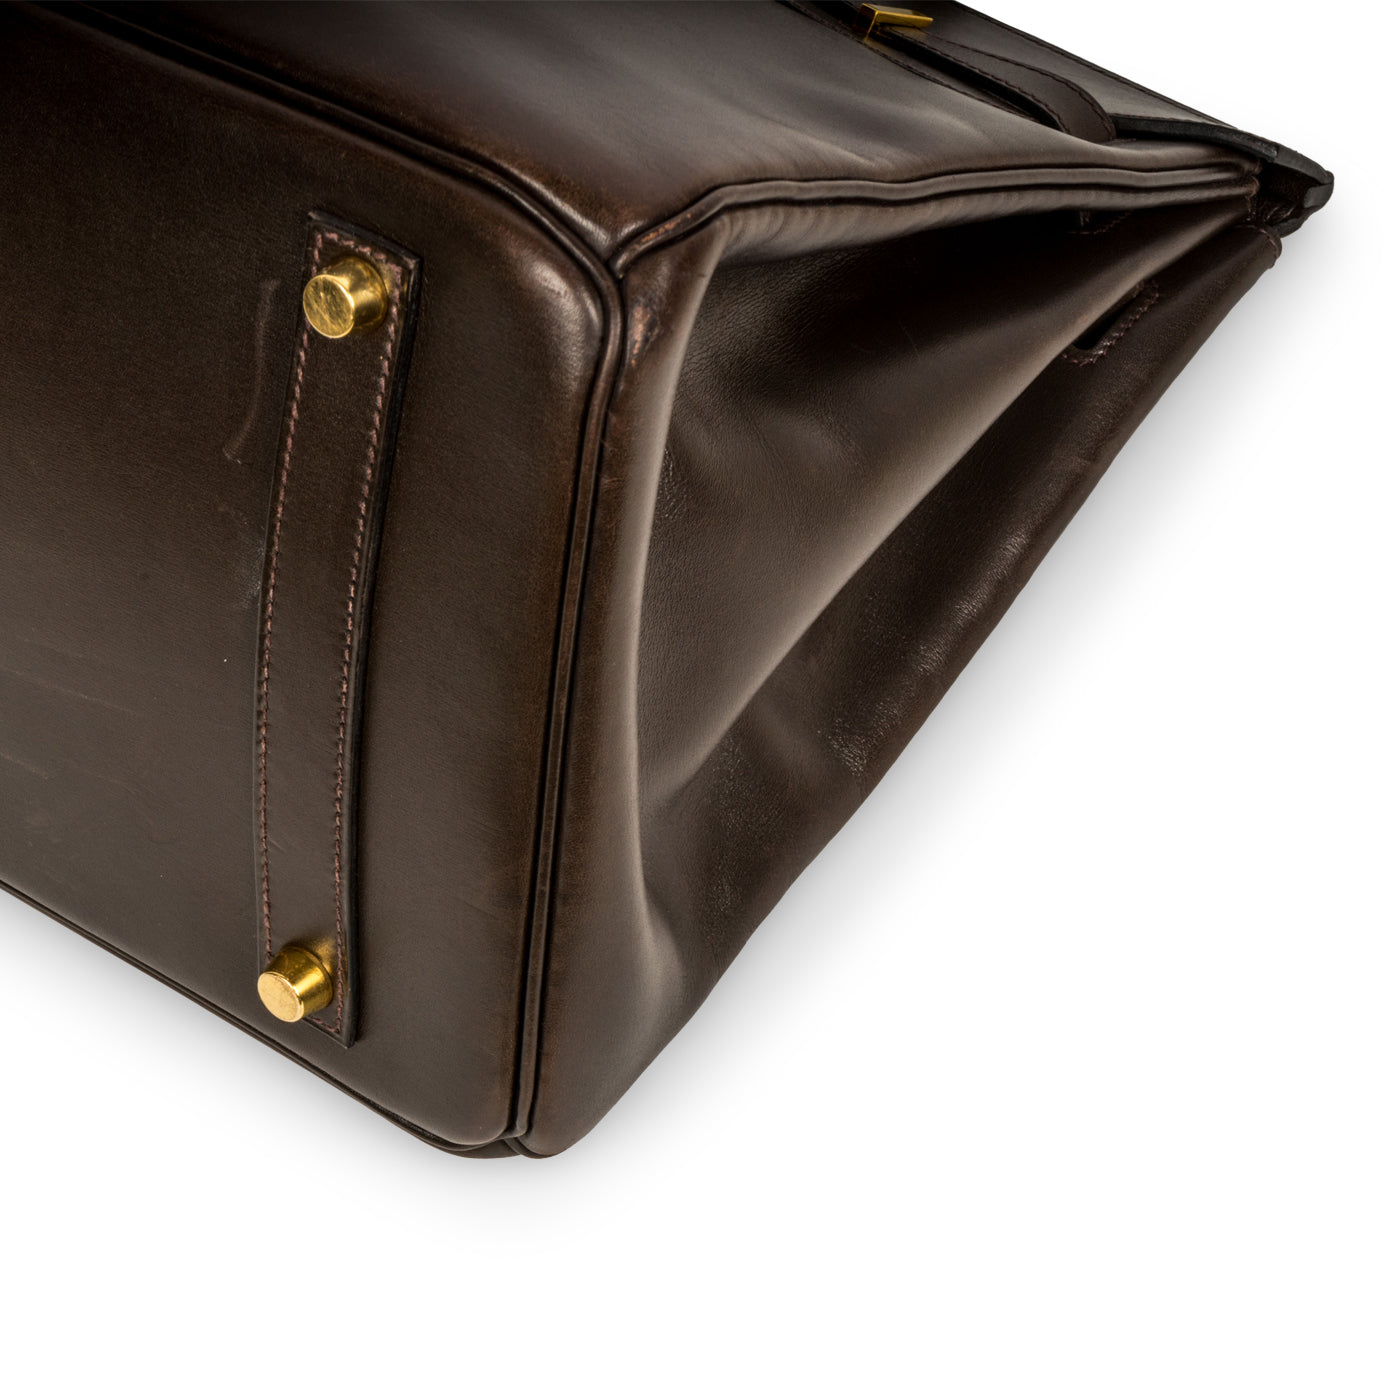 Hermes Birkin 35 Box Leather Chocolate - ADL1159